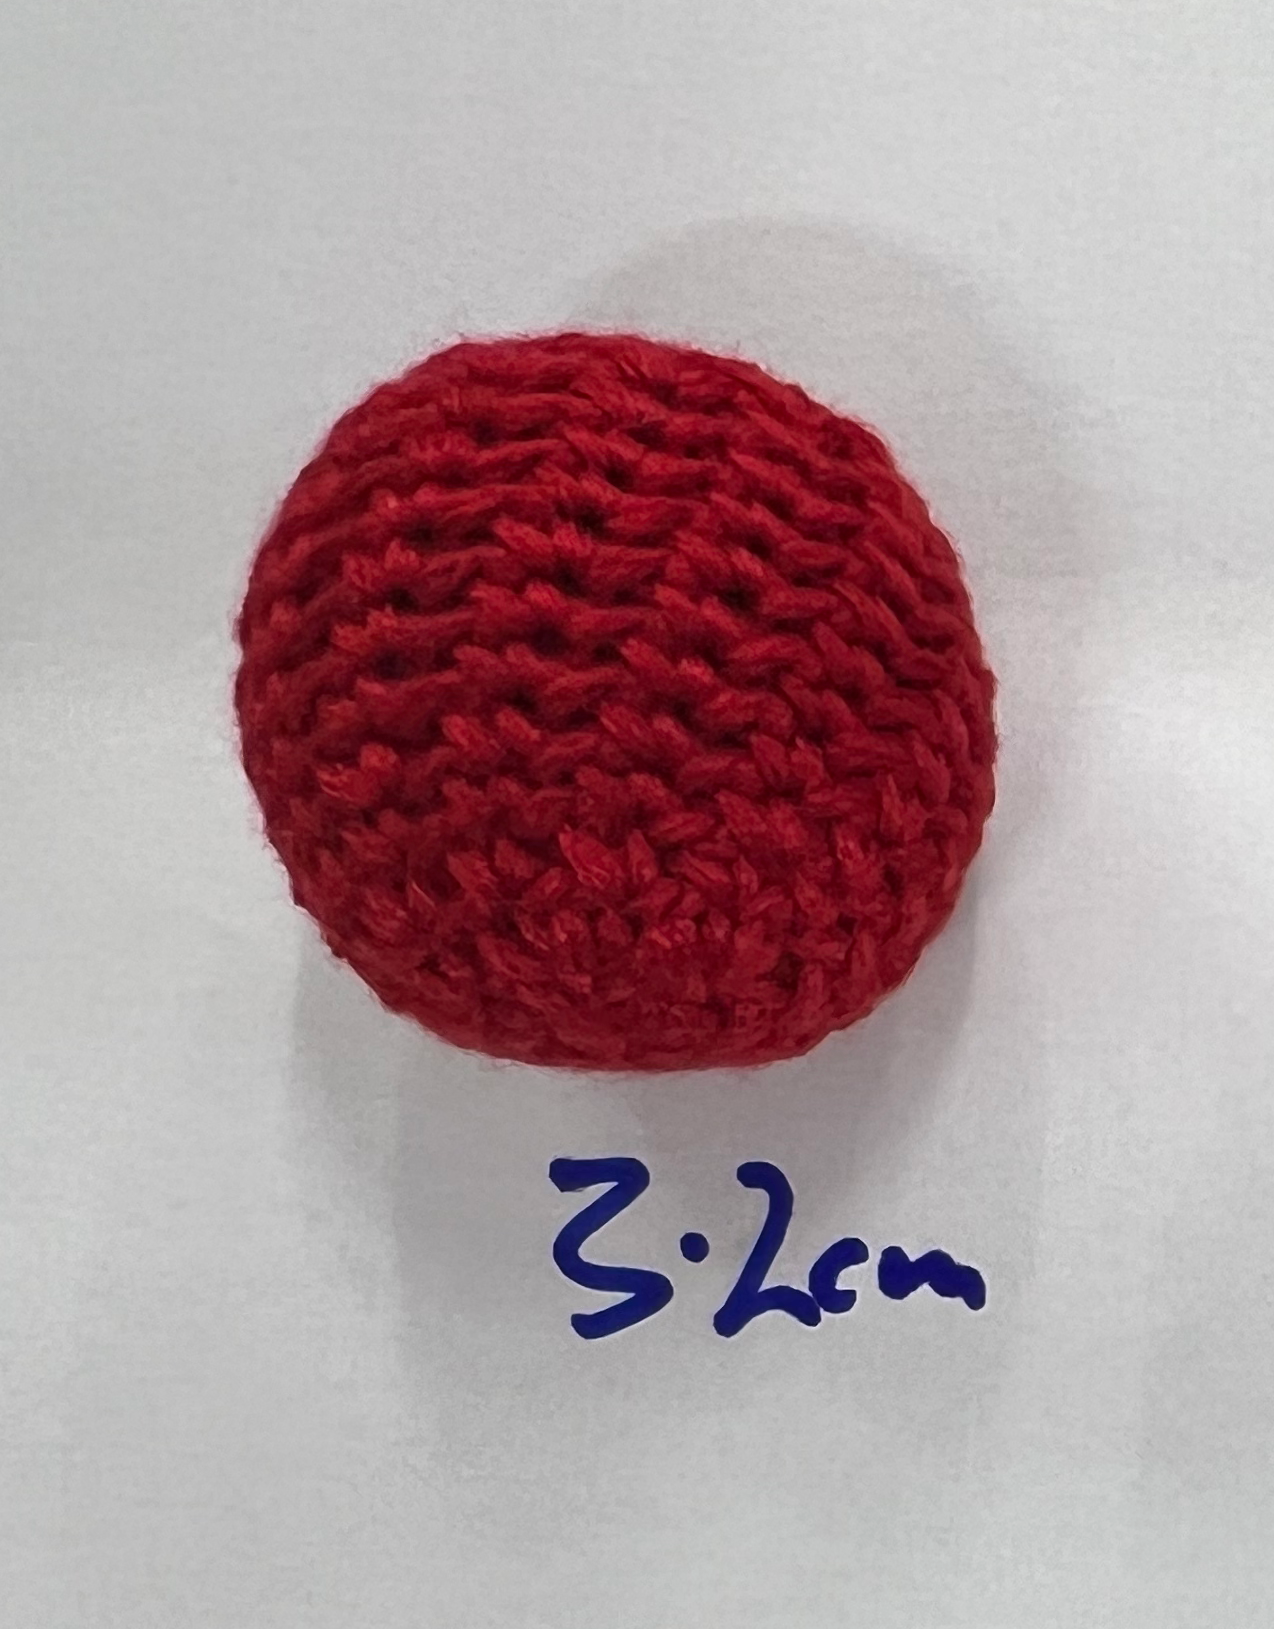 Crochet Balls for Chop Cup